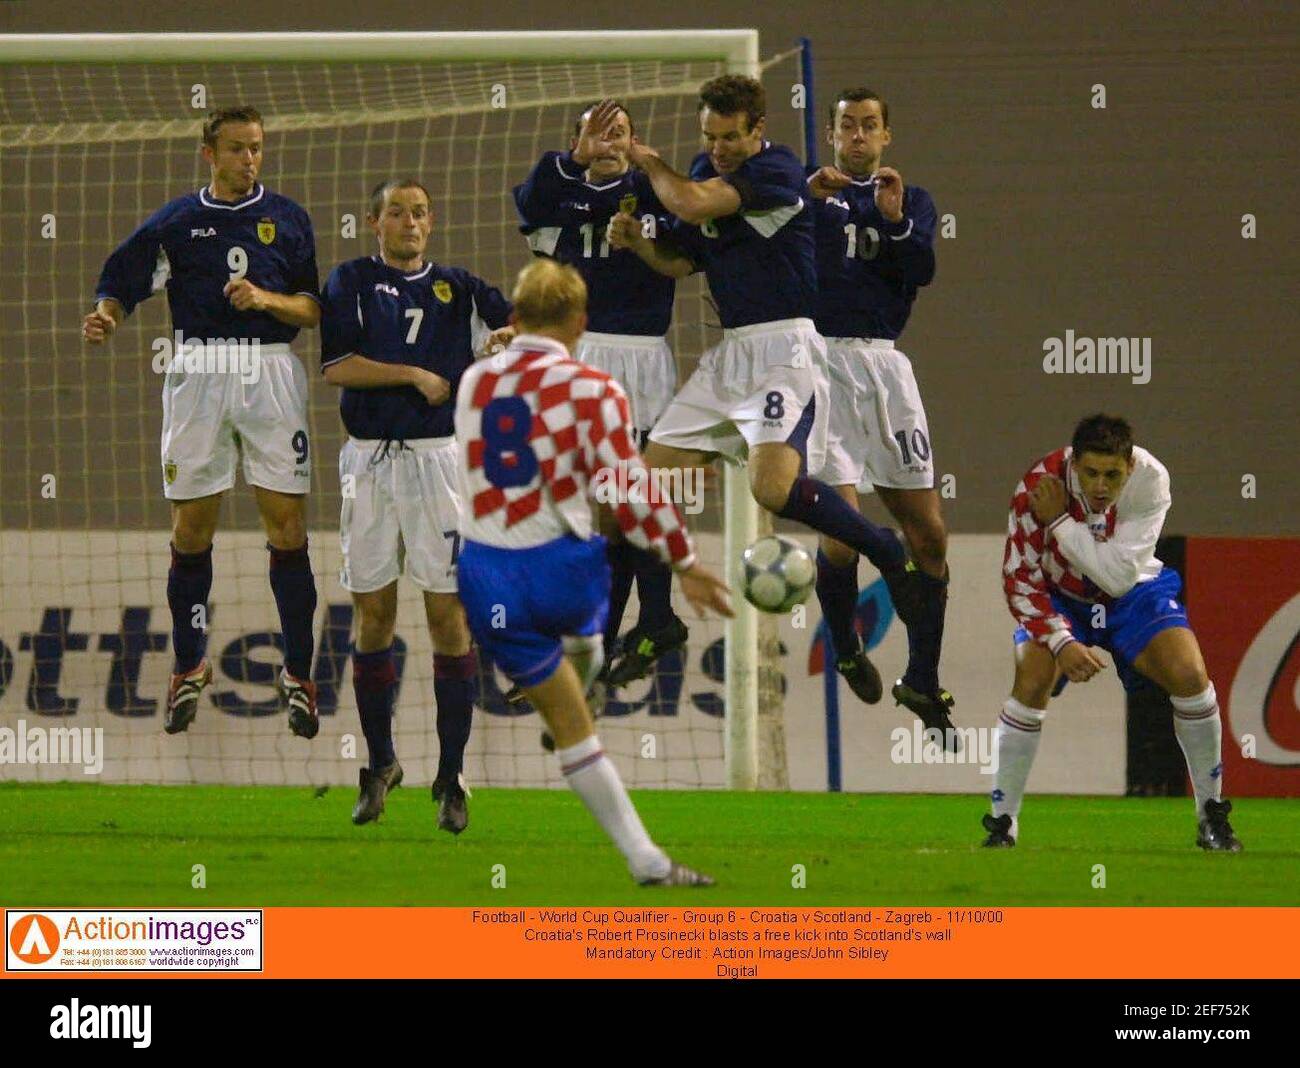 Croatia vs scotland